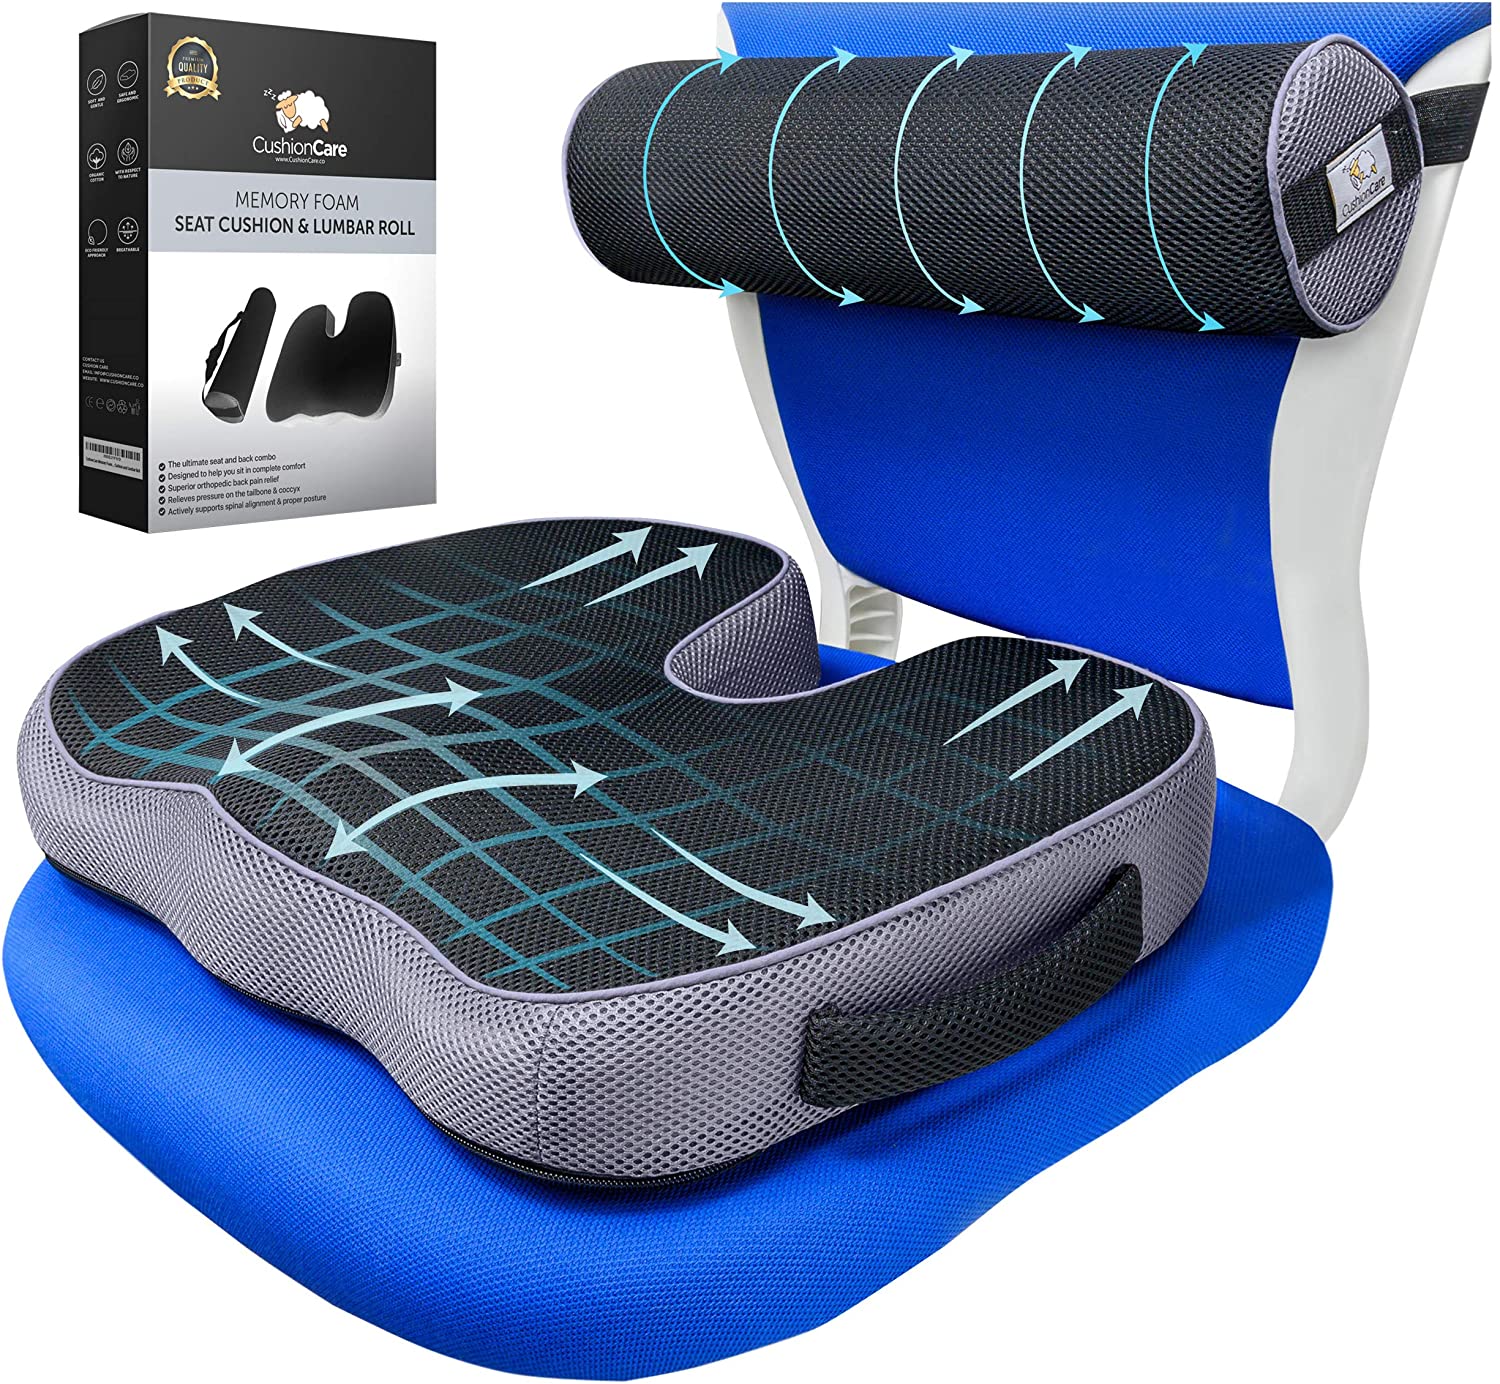 LILLYZEN Donut Pillow for Tailbone Pain Relief Memory Foam Seat Cushion Orthopedic Seat Pressure Relief Sitting Coccyx Sciatica Hemorrhoid Pregnancy